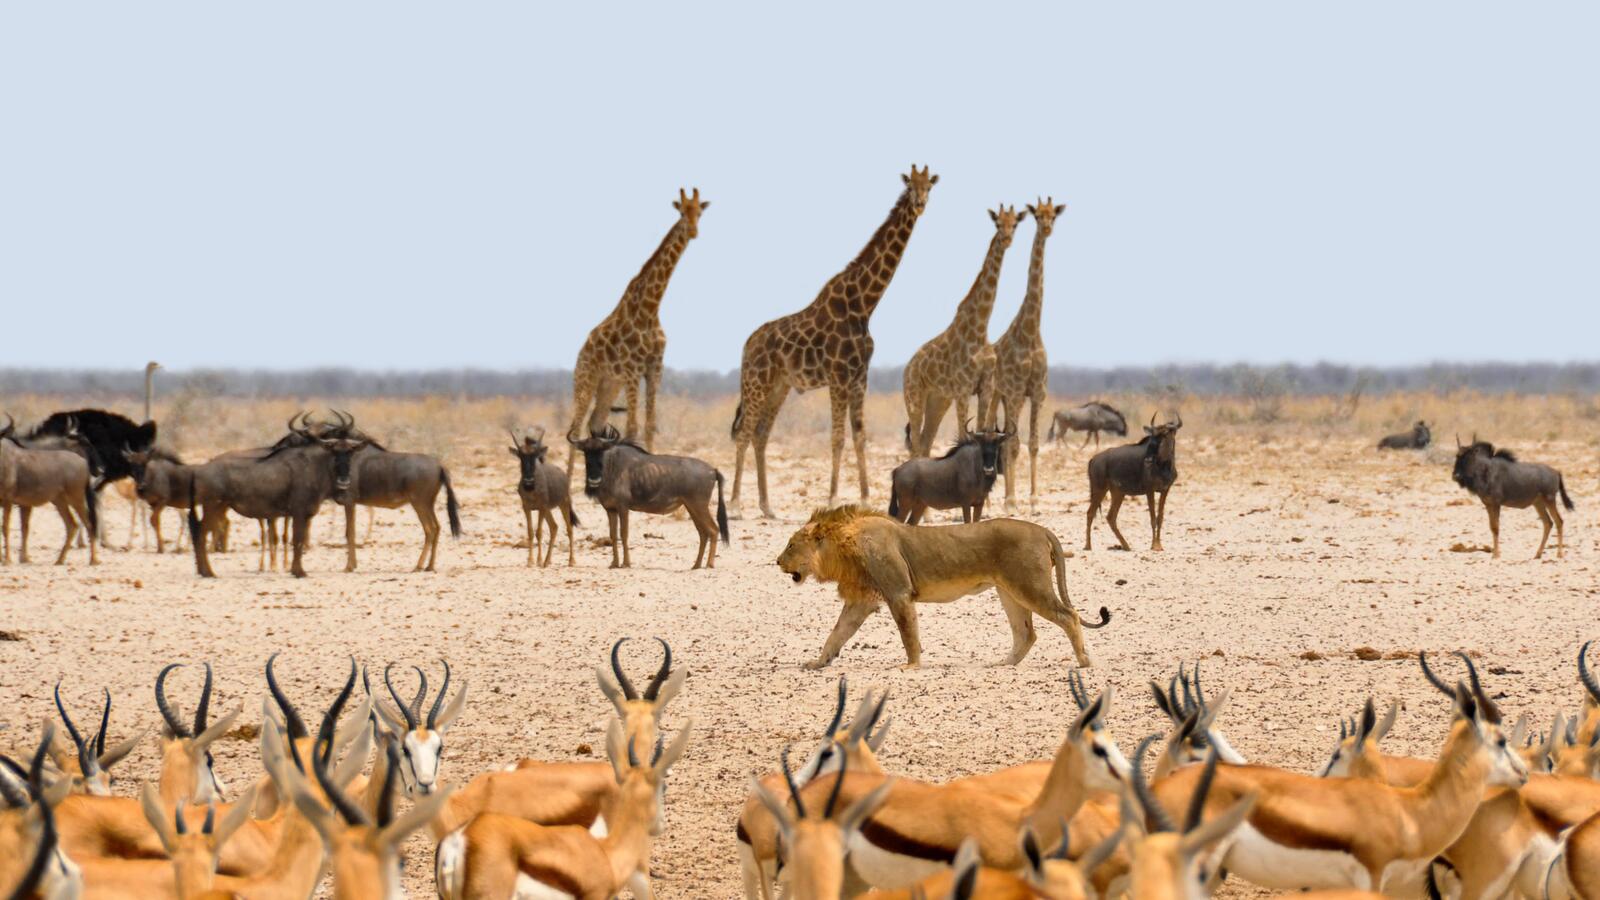 Wallpapers Savanna prairie giraffes on the desktop